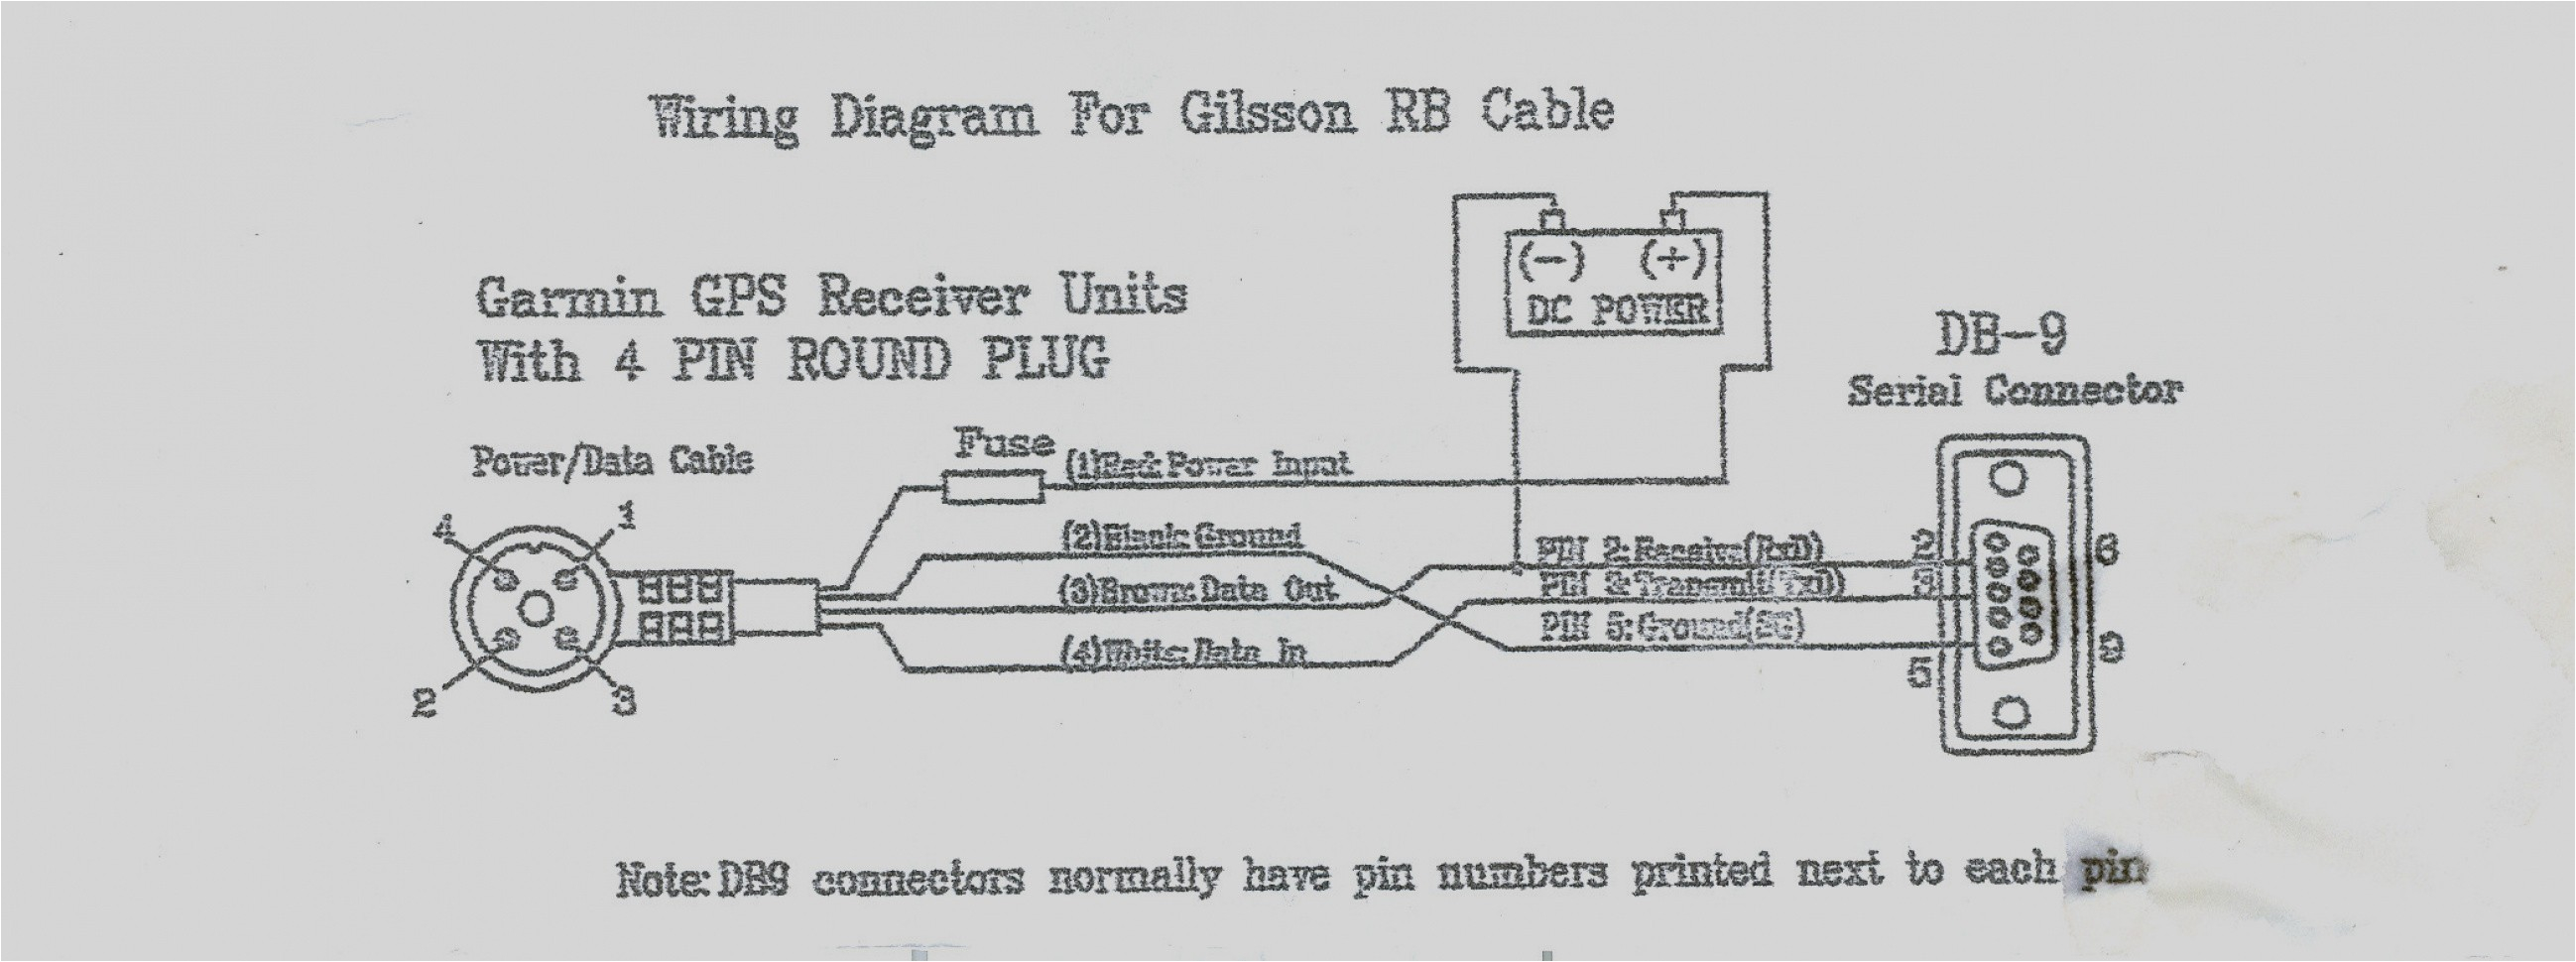 garmin gps wiring diagram 2006 wiring diagram toolbox